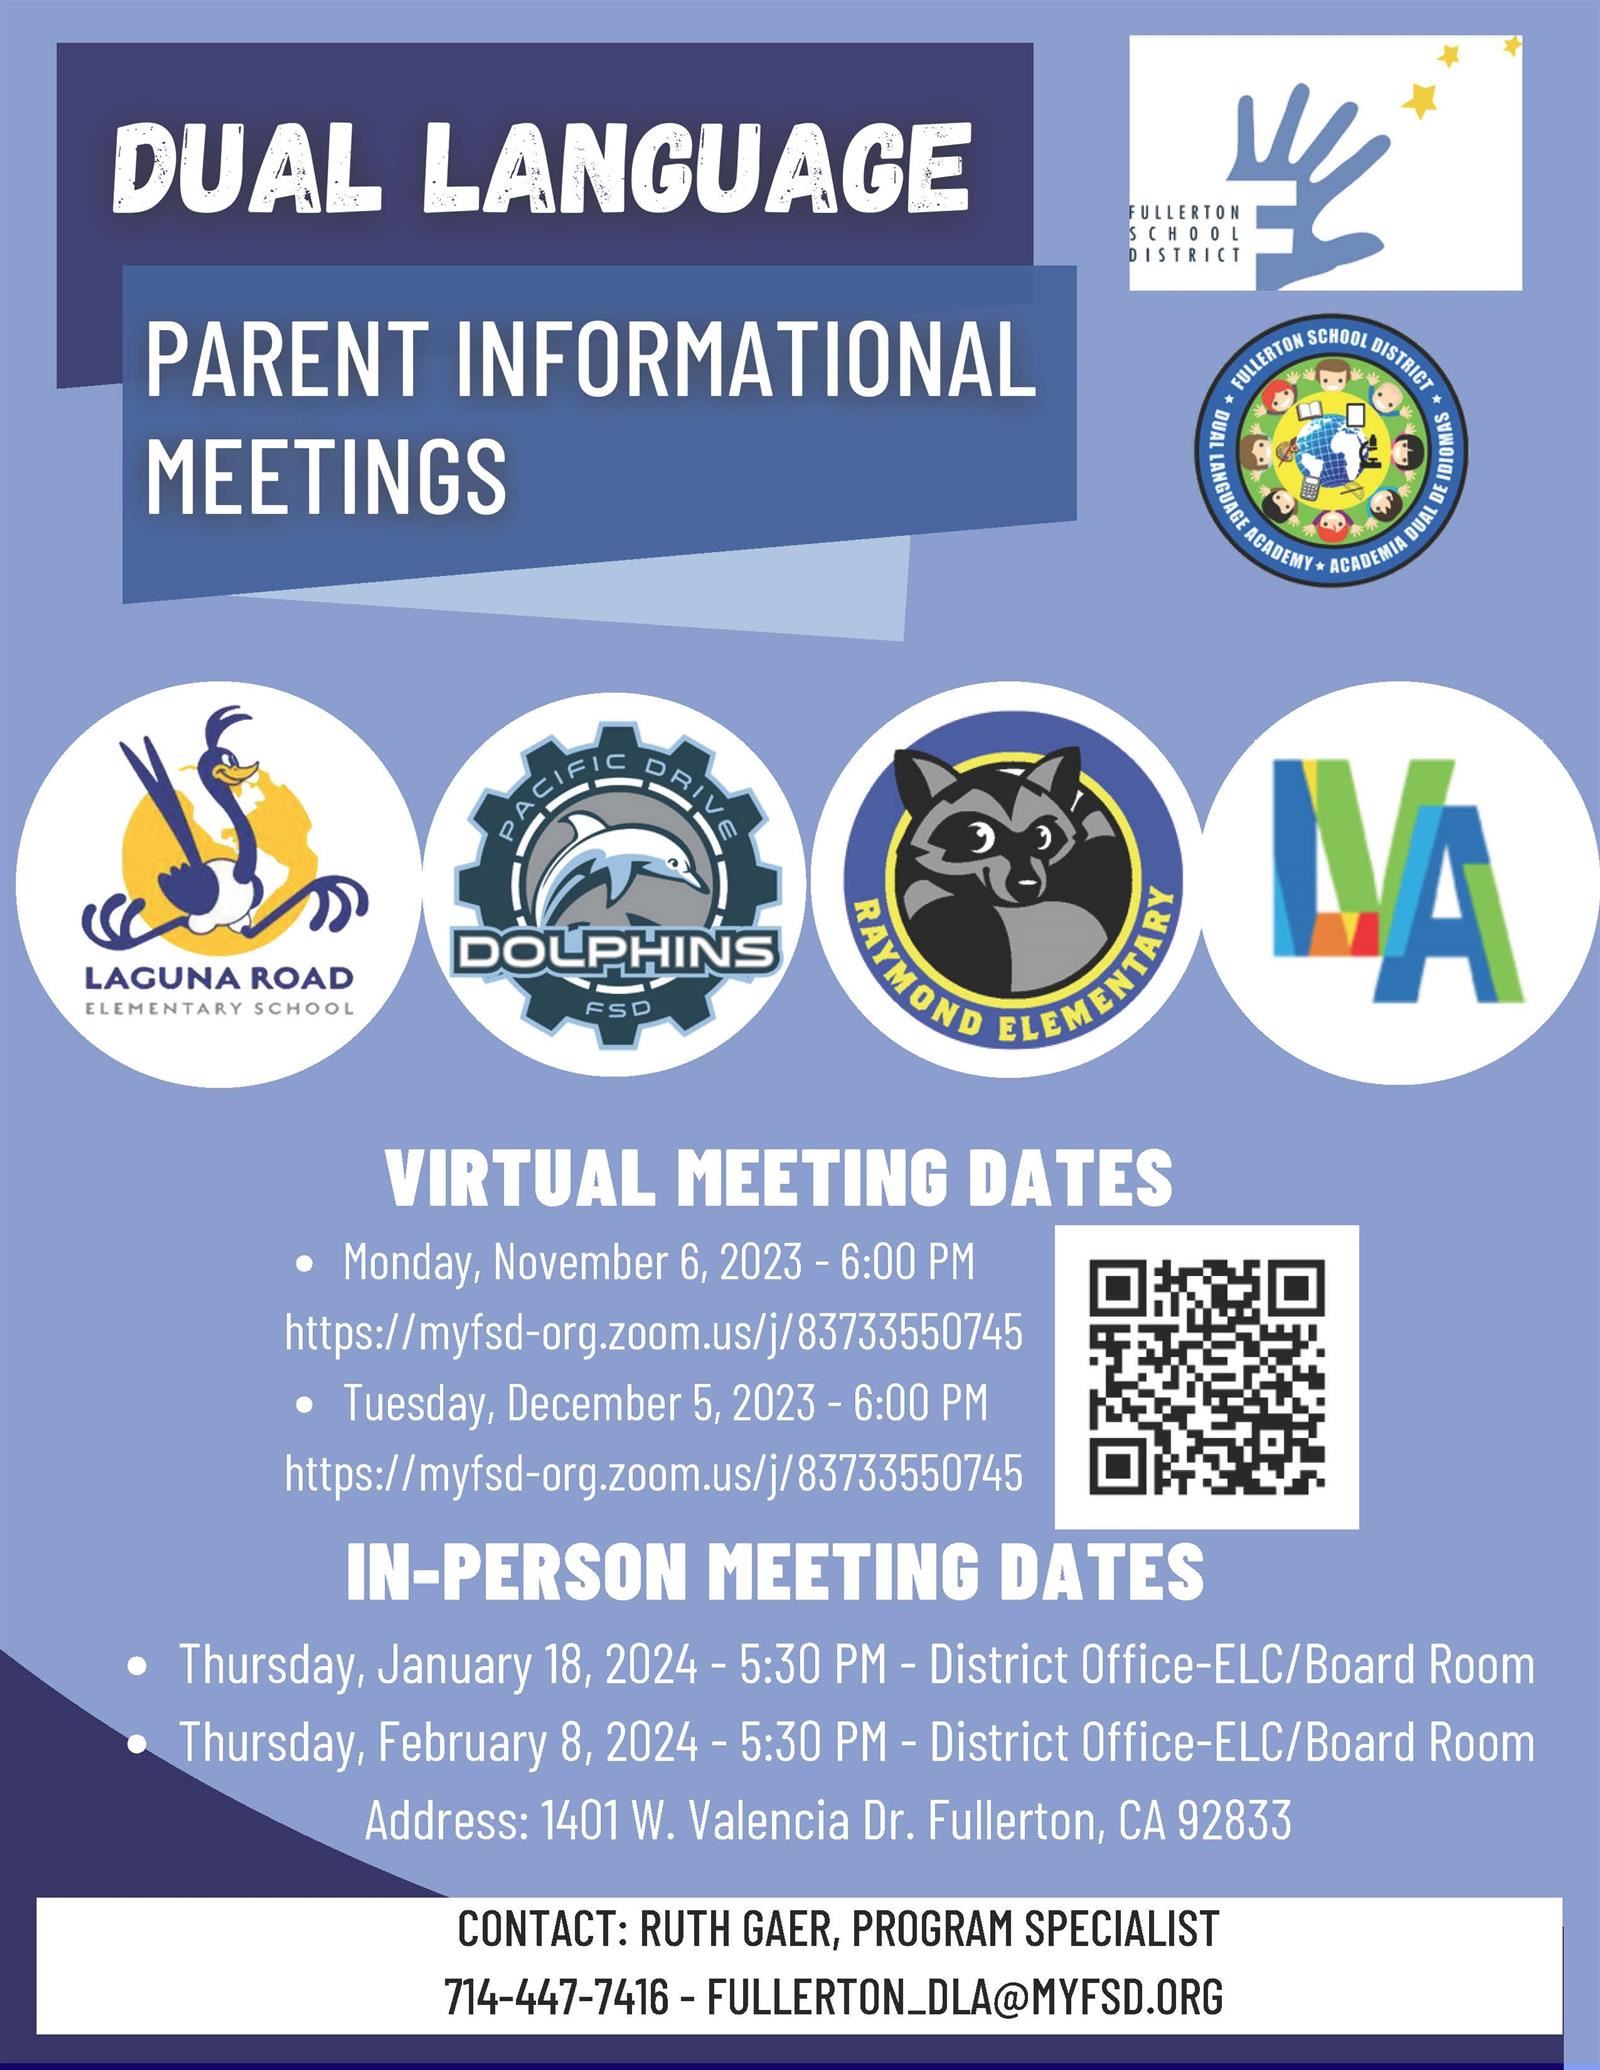  Dual Language Parent Informational Meetings